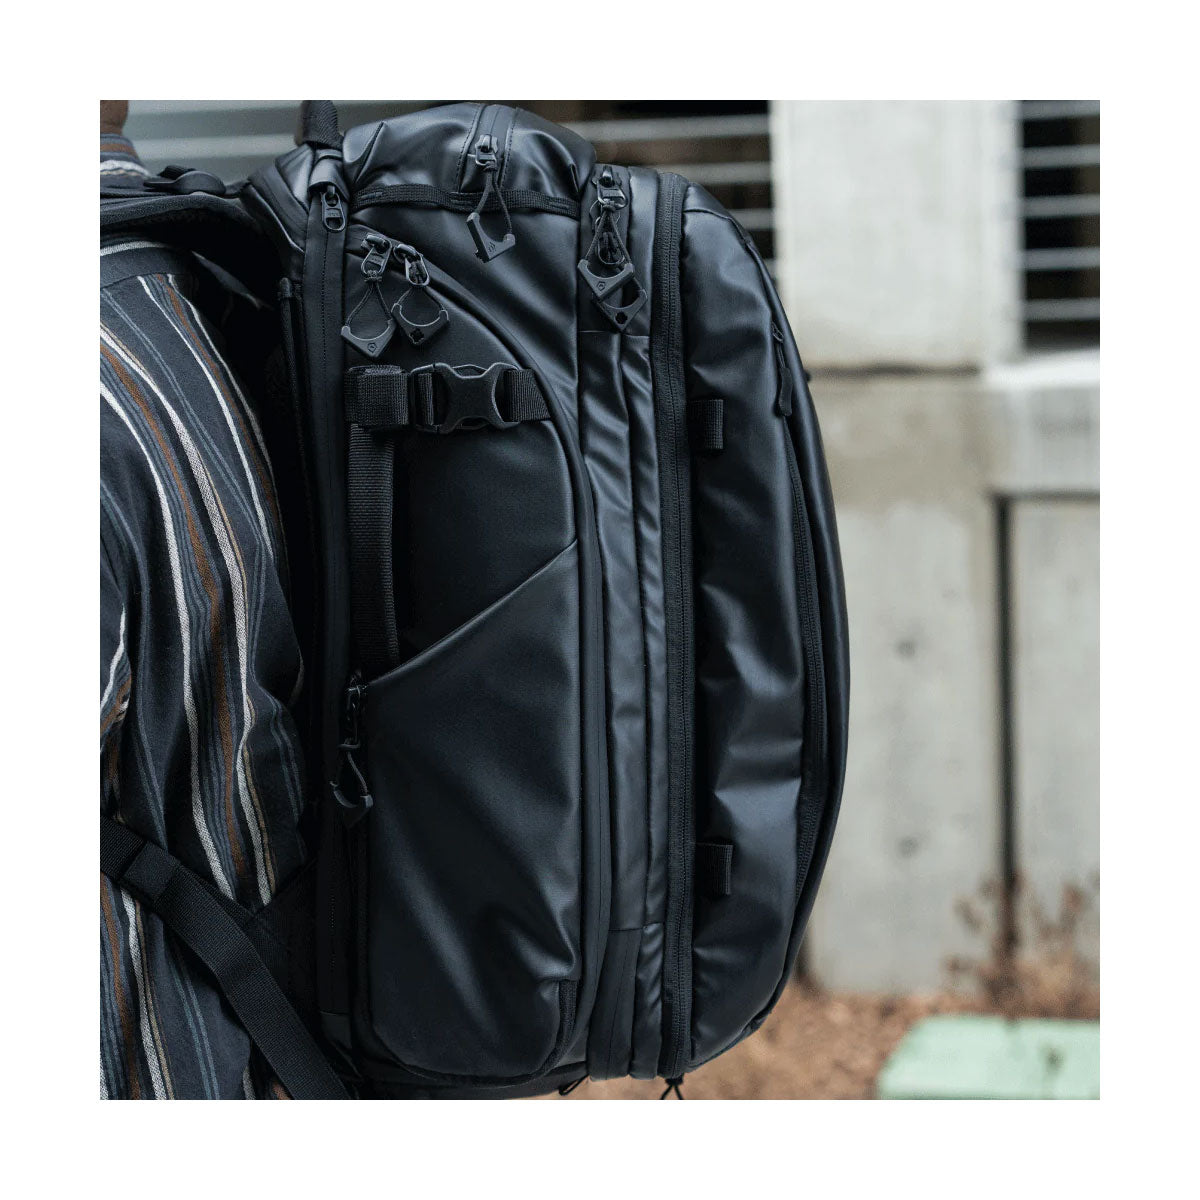 Wandrd : Transit Travel Backpack : Black